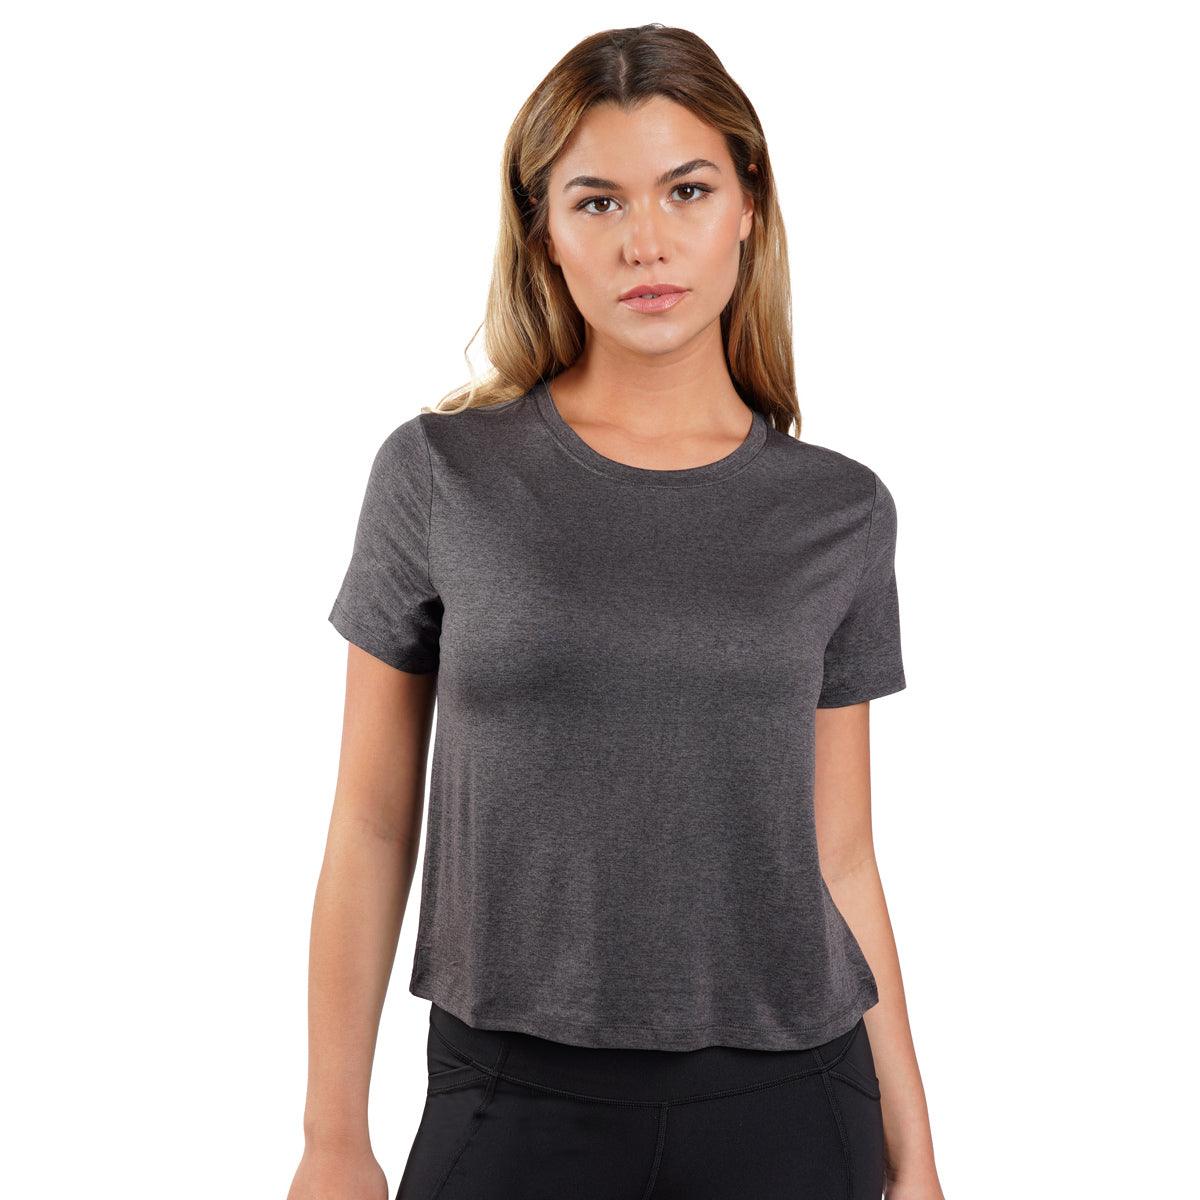 Yogalicious - Gray Activewear Shirt Polyester Spandex Rayon